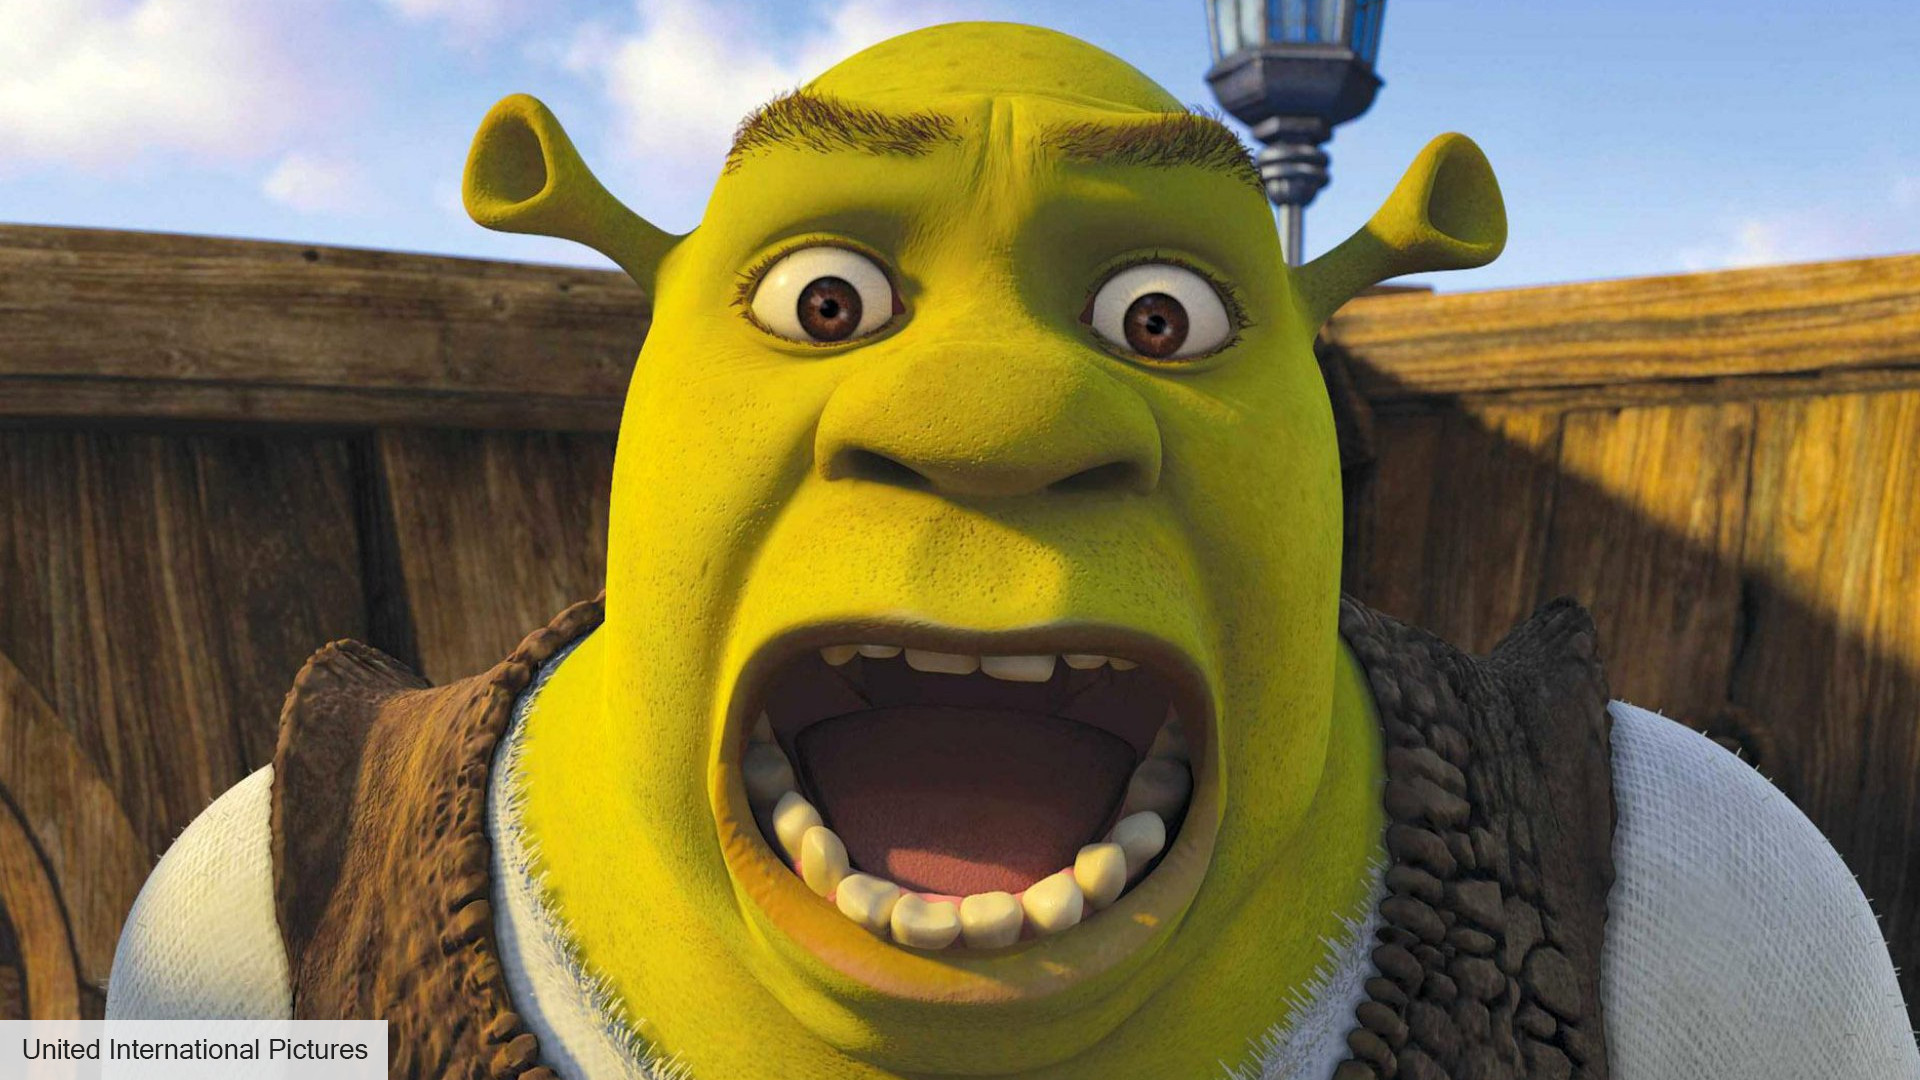 Shrek 5 release date, trailer, cast and more The Digital Fix